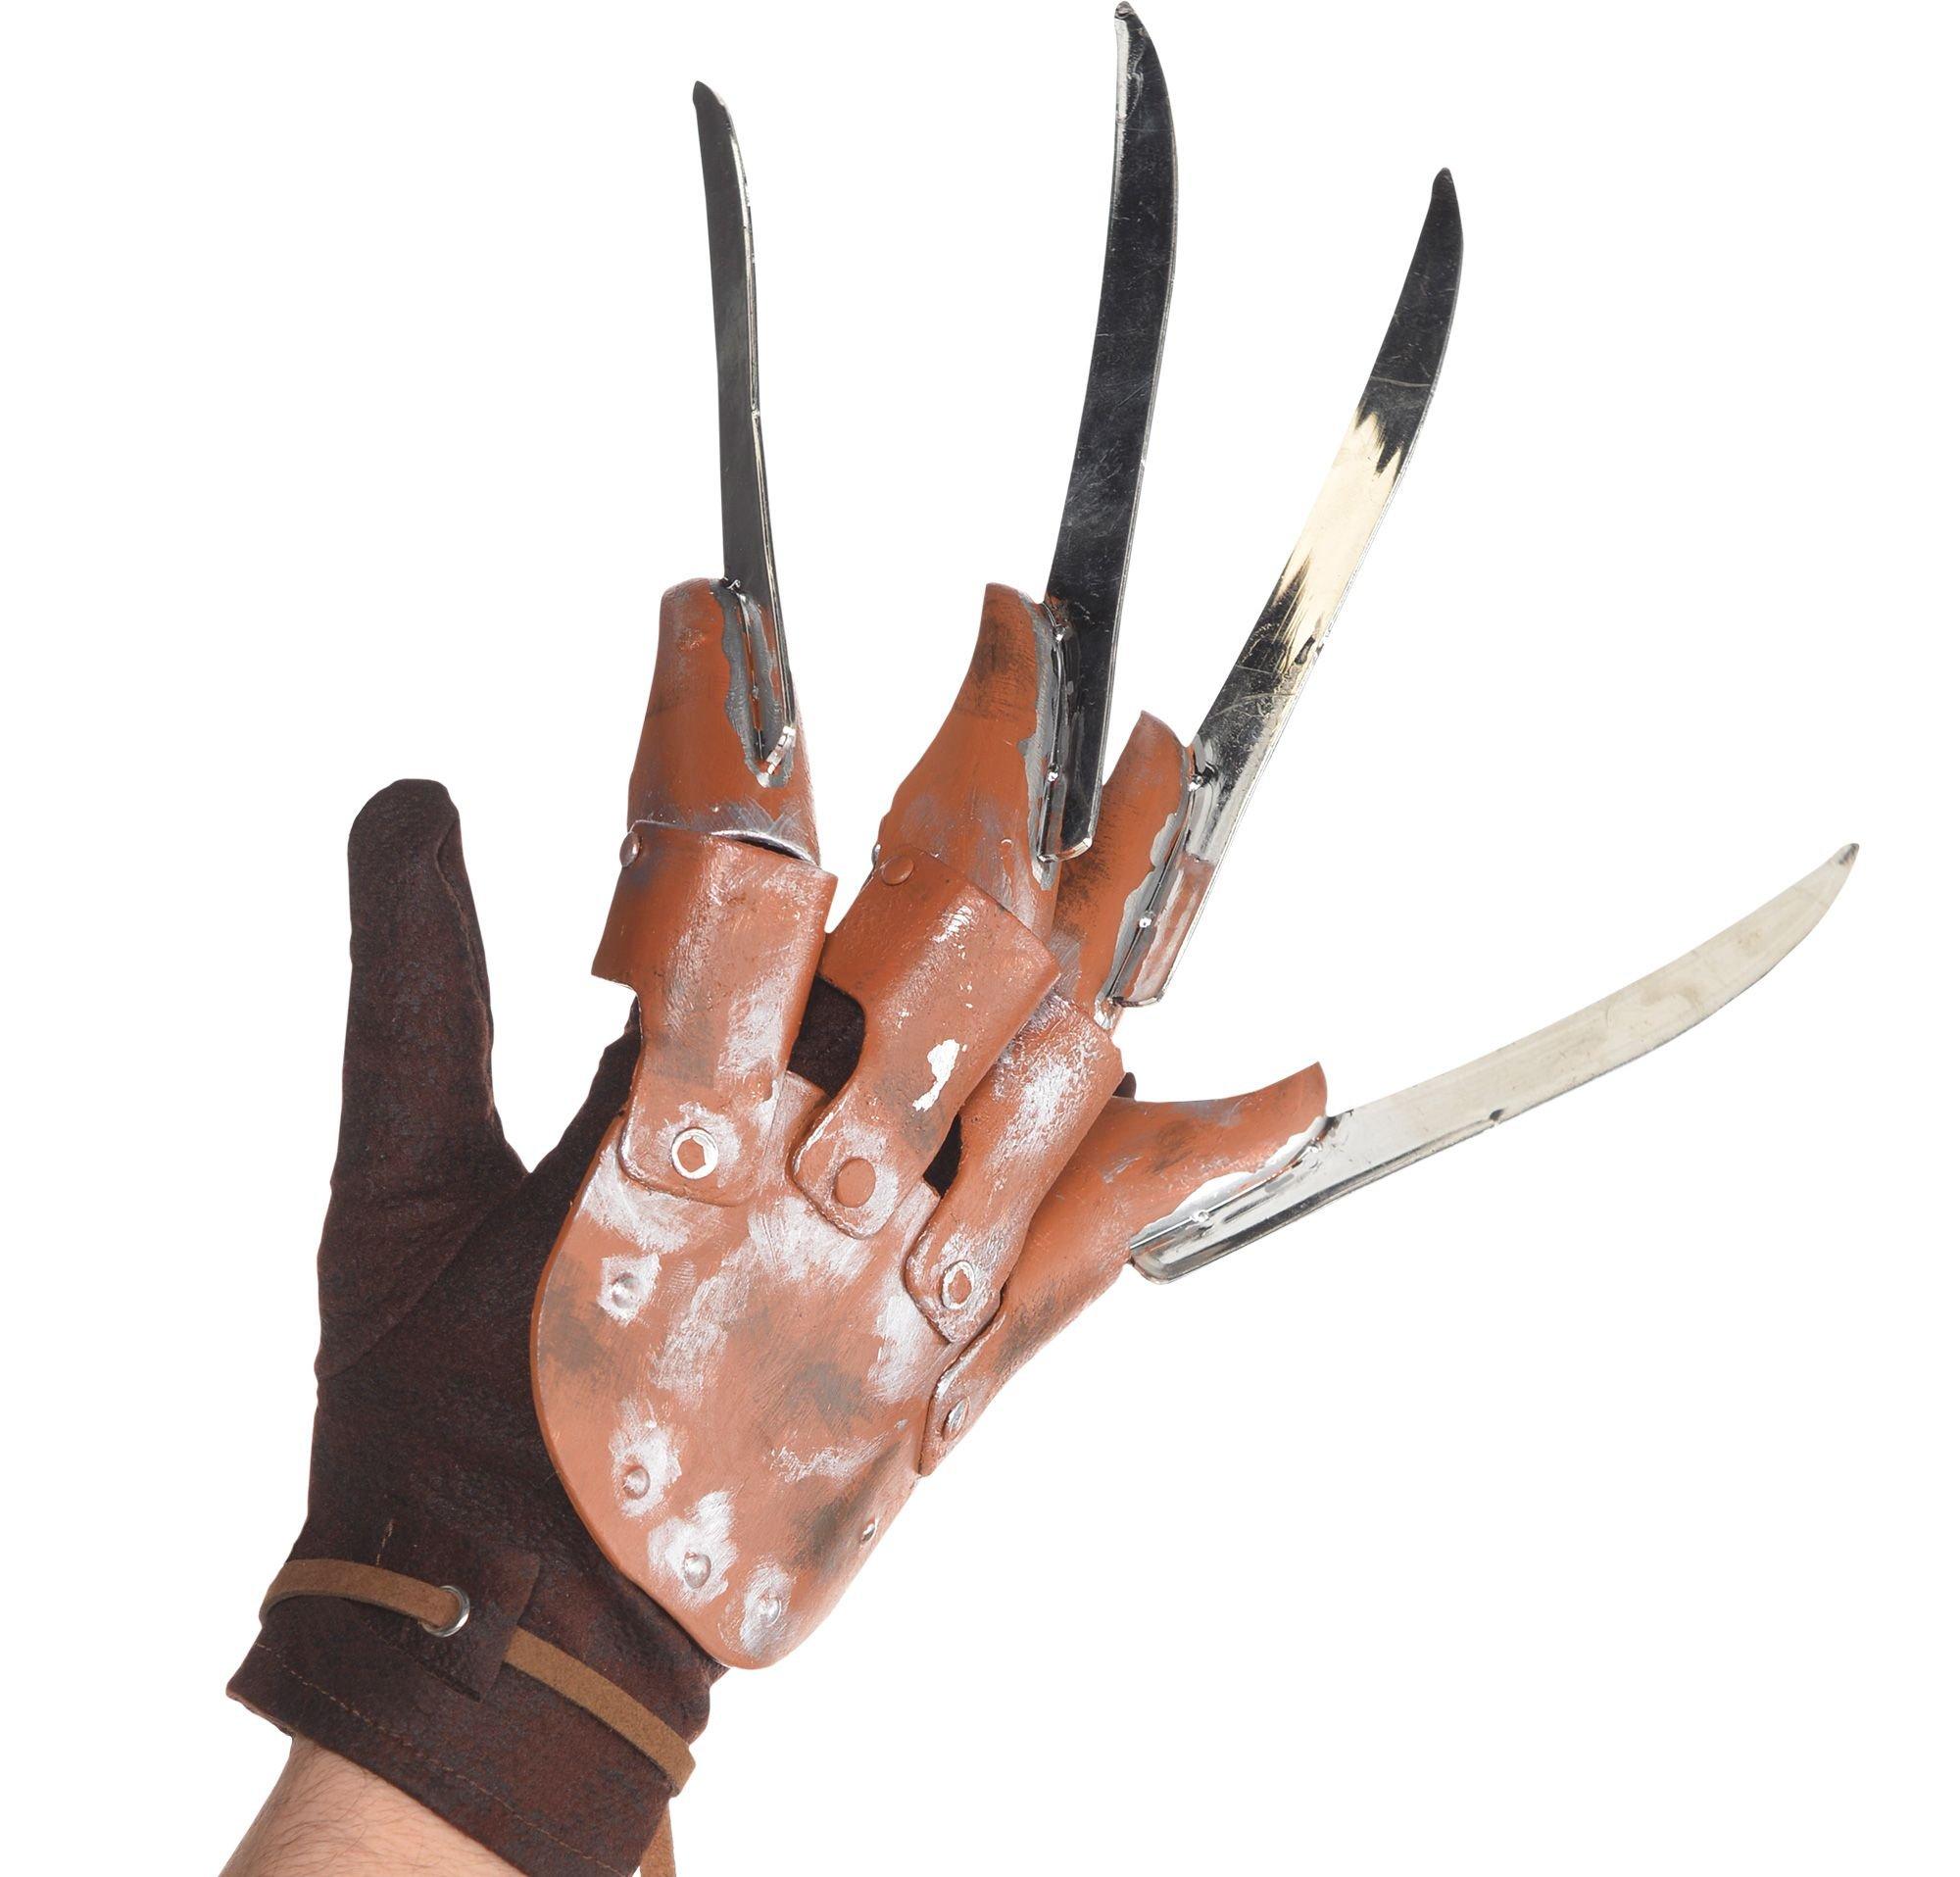 Freddy Krueger Glove - A Nightmare on Elm Street